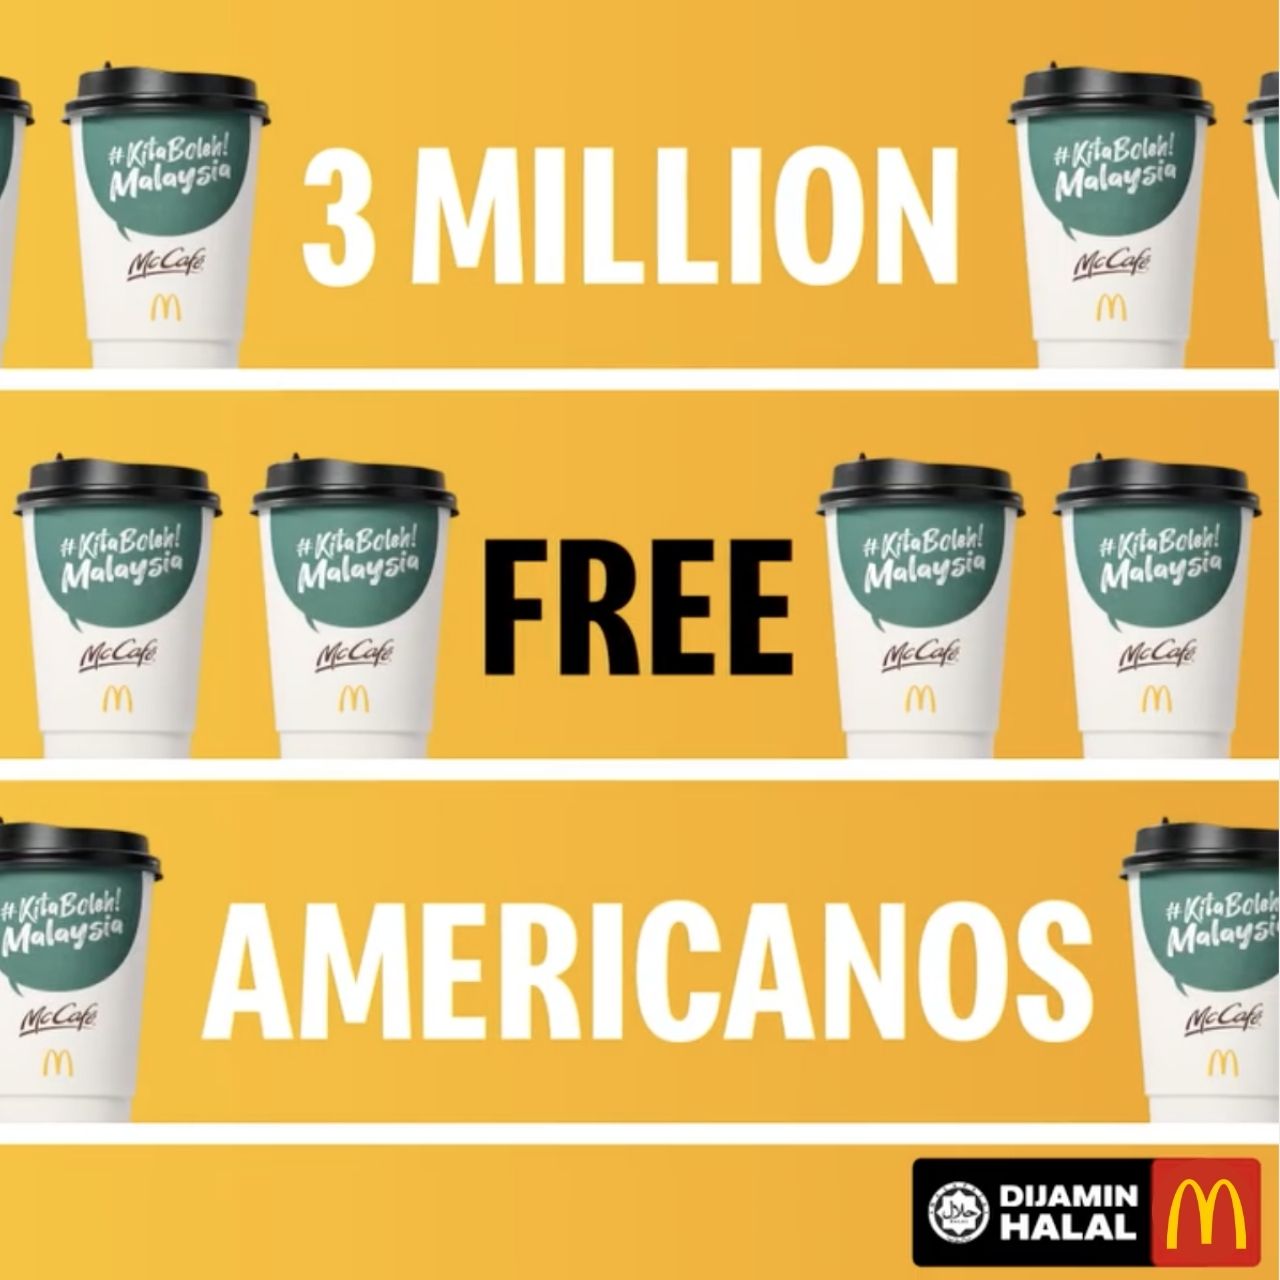 3 Million Free McCafe Americanos Giveaway